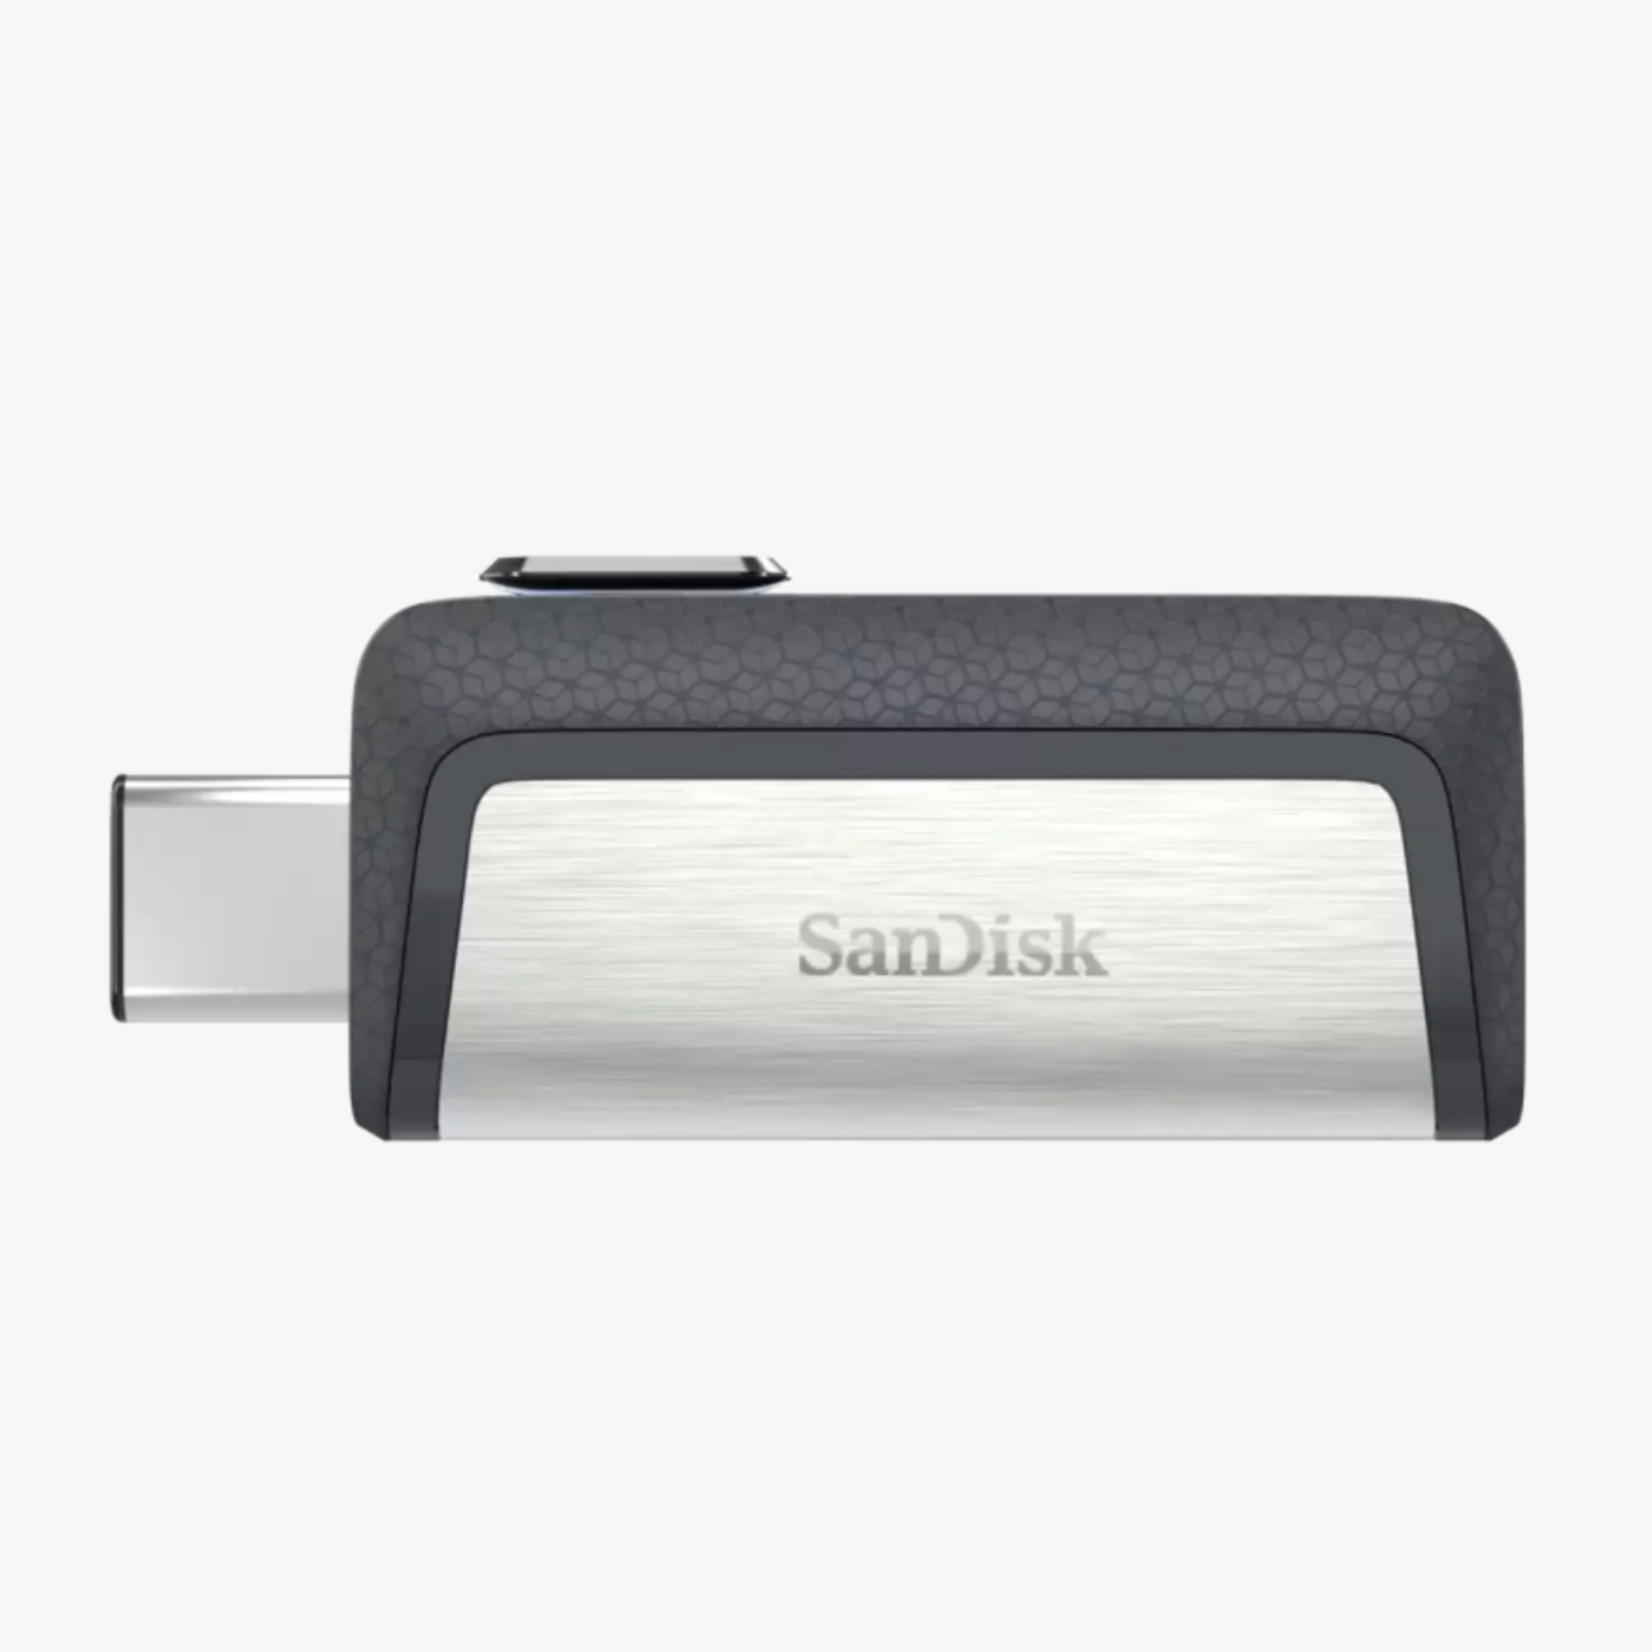 SanDisk SANDISK ULTRA DUAL FLASH DRIVE, TYPE C, 256GB, USB 3.1, HIGH-SPEED PERFORMANCE